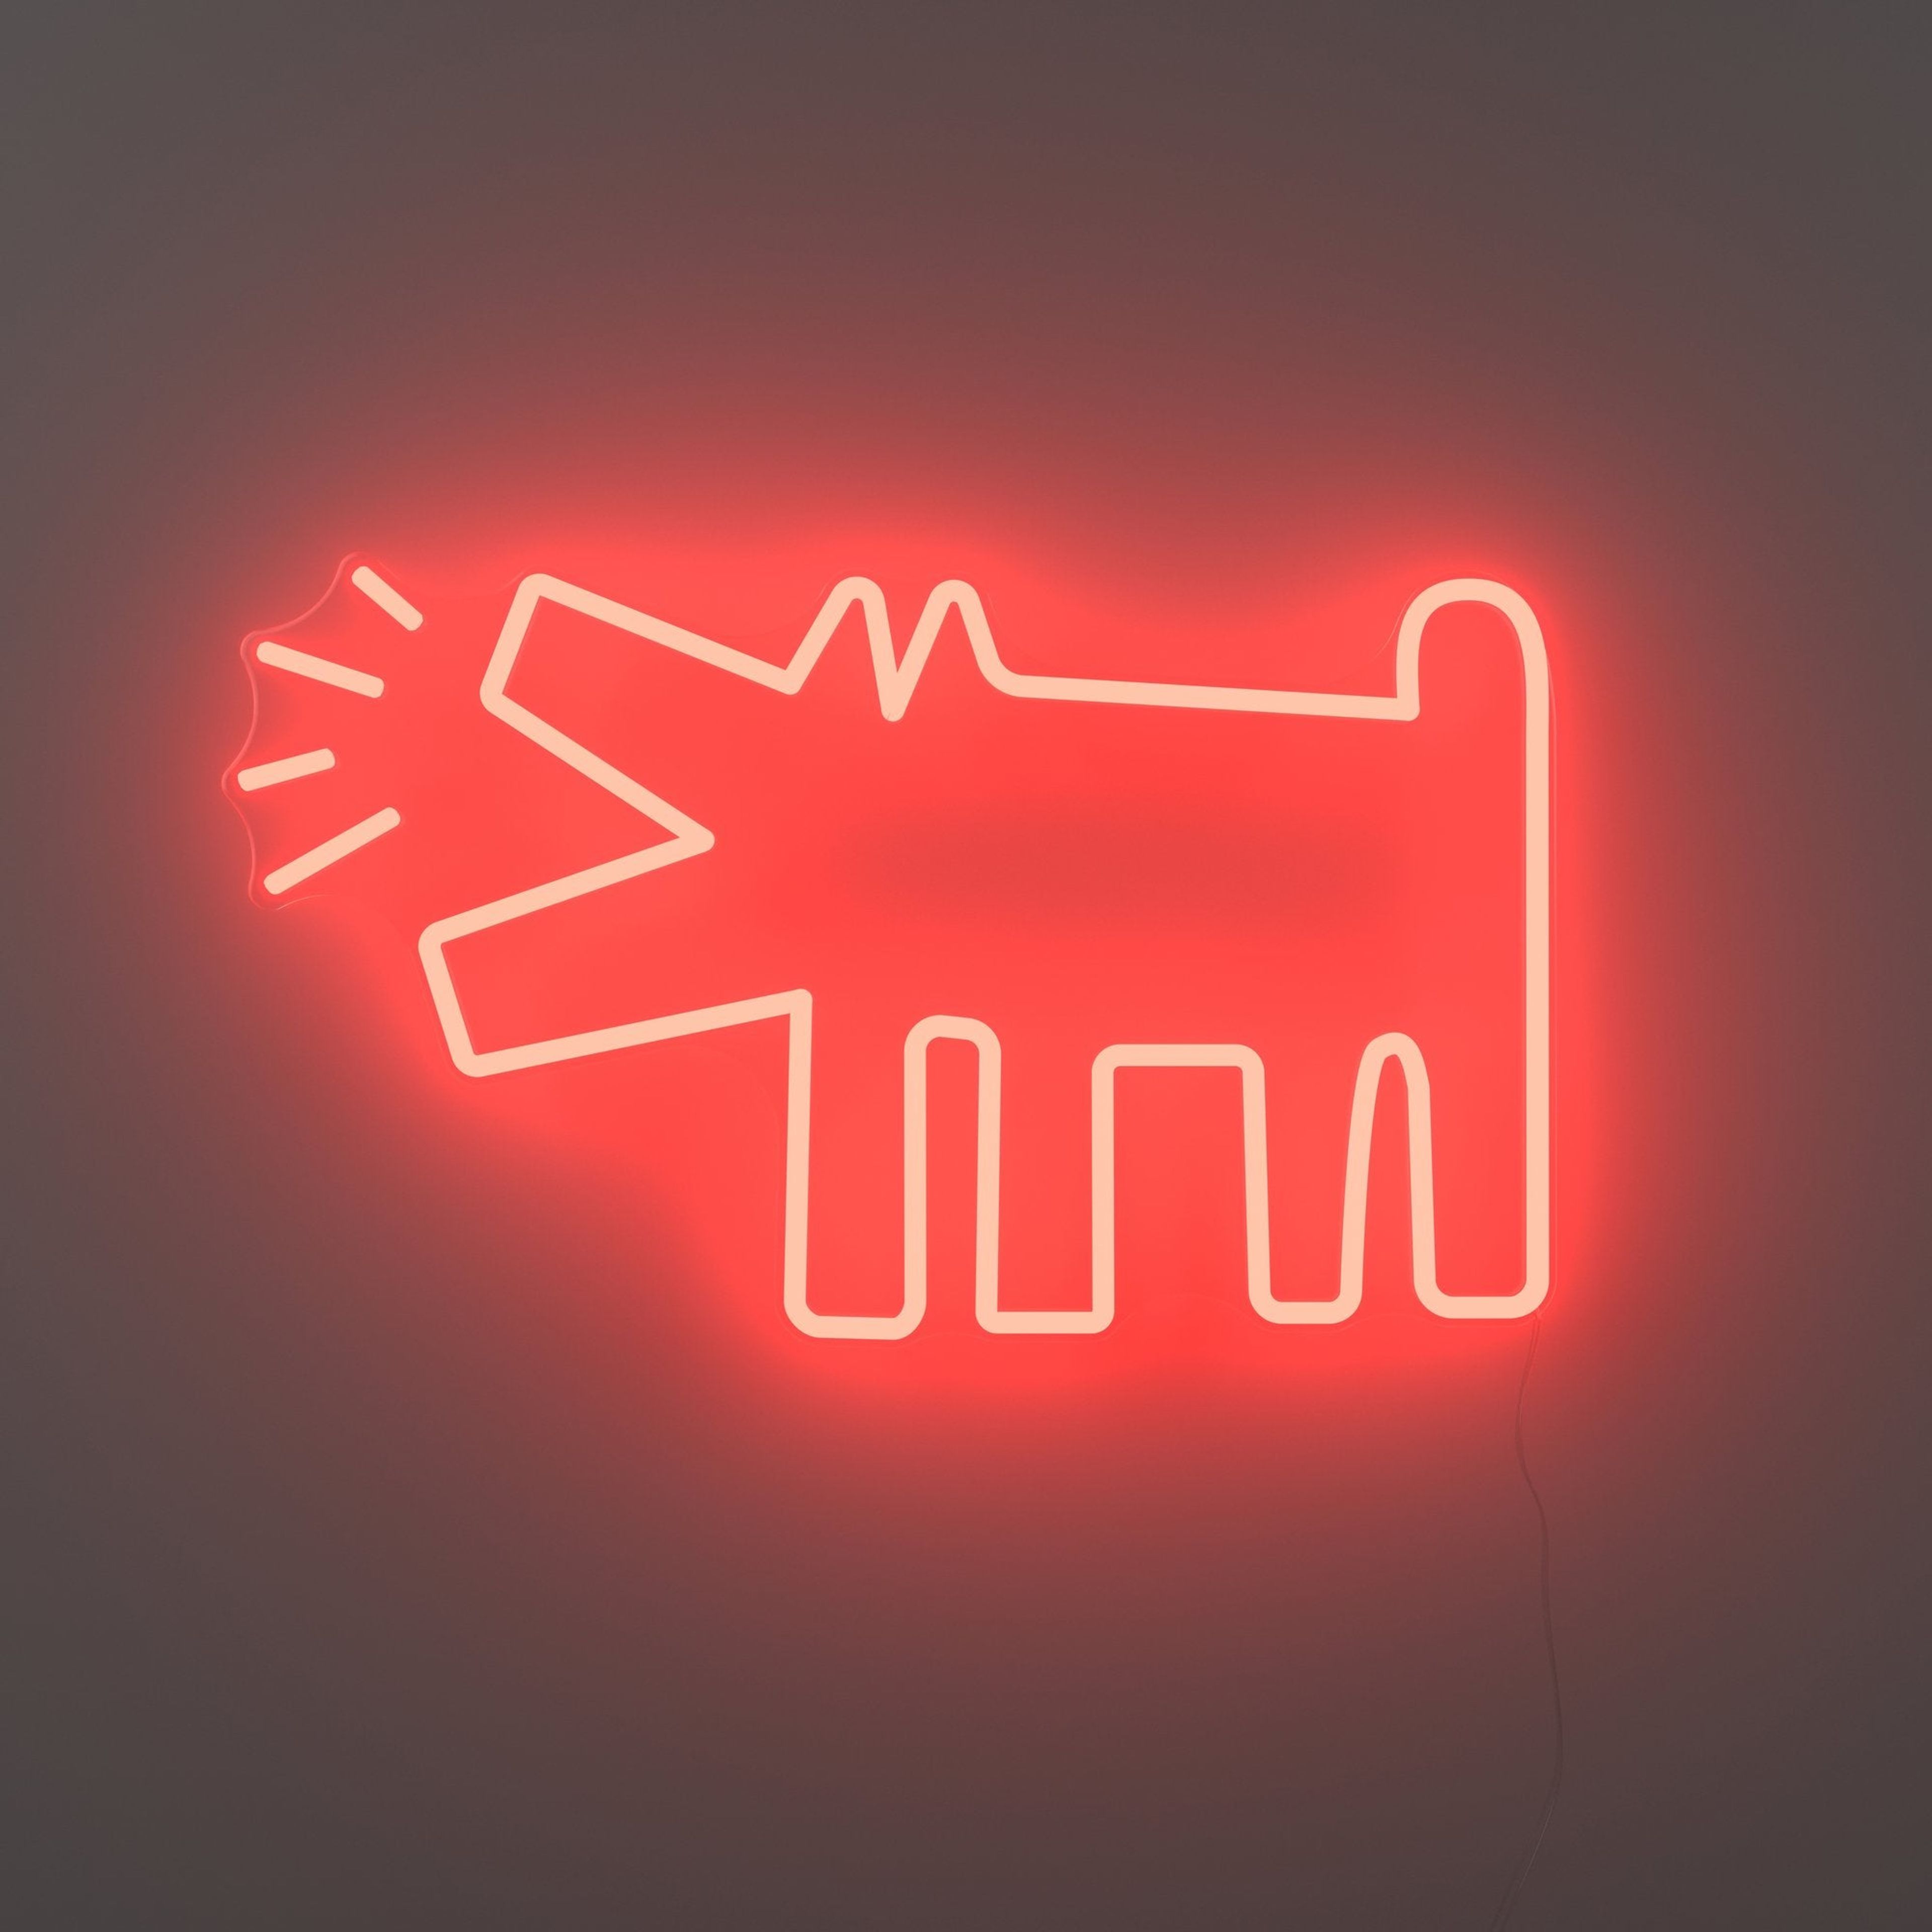 Barking Dog, YP x Keith Haring, LED neon sign